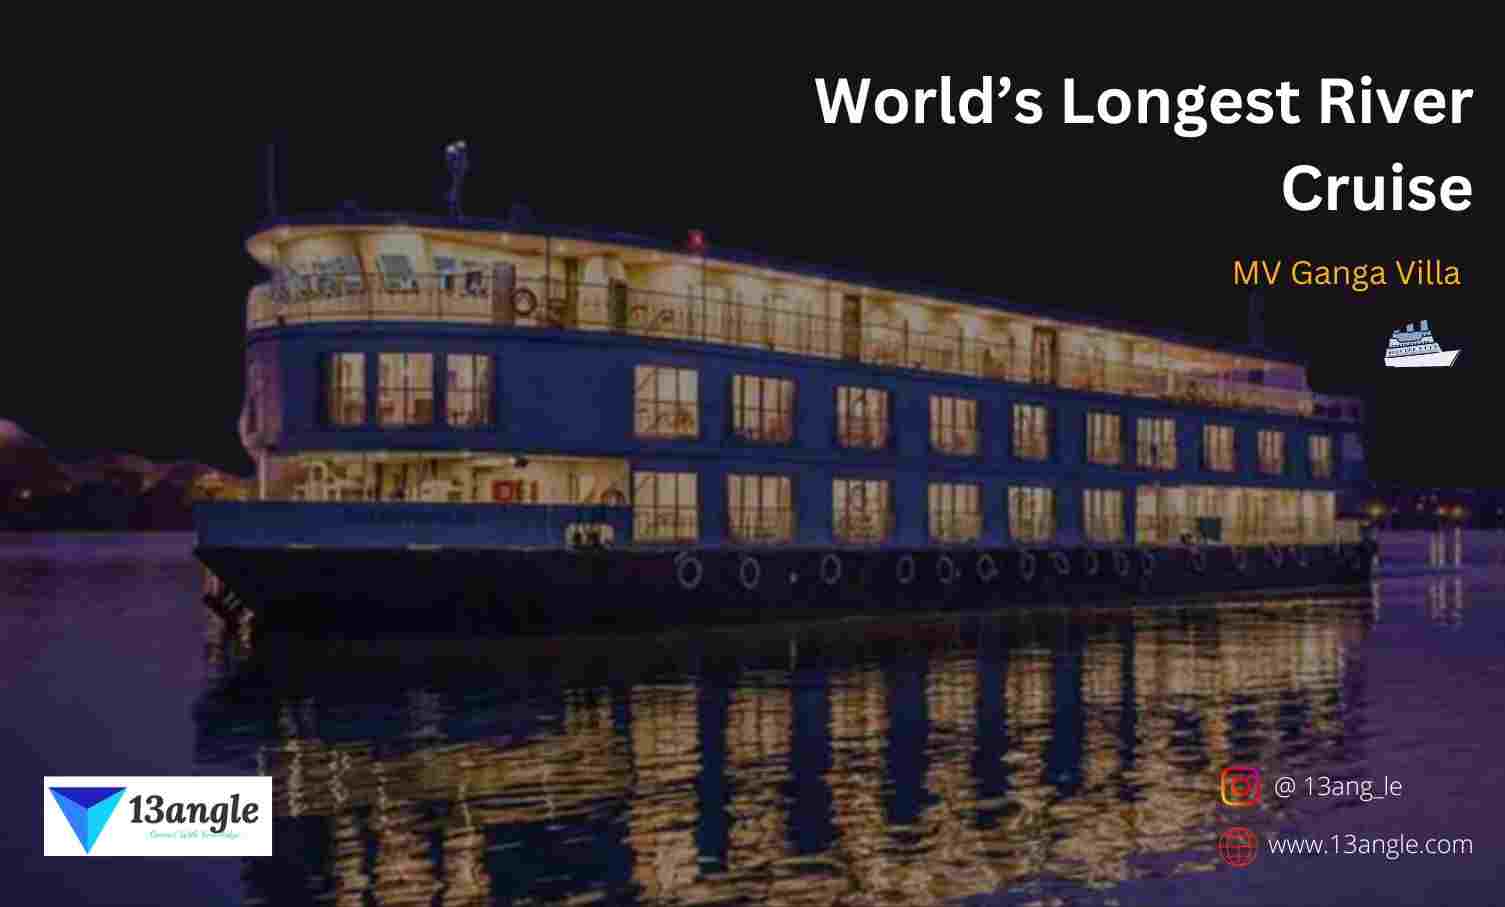 World’s Longest River Cruise (MV Ganga Villa)- 13angle.com